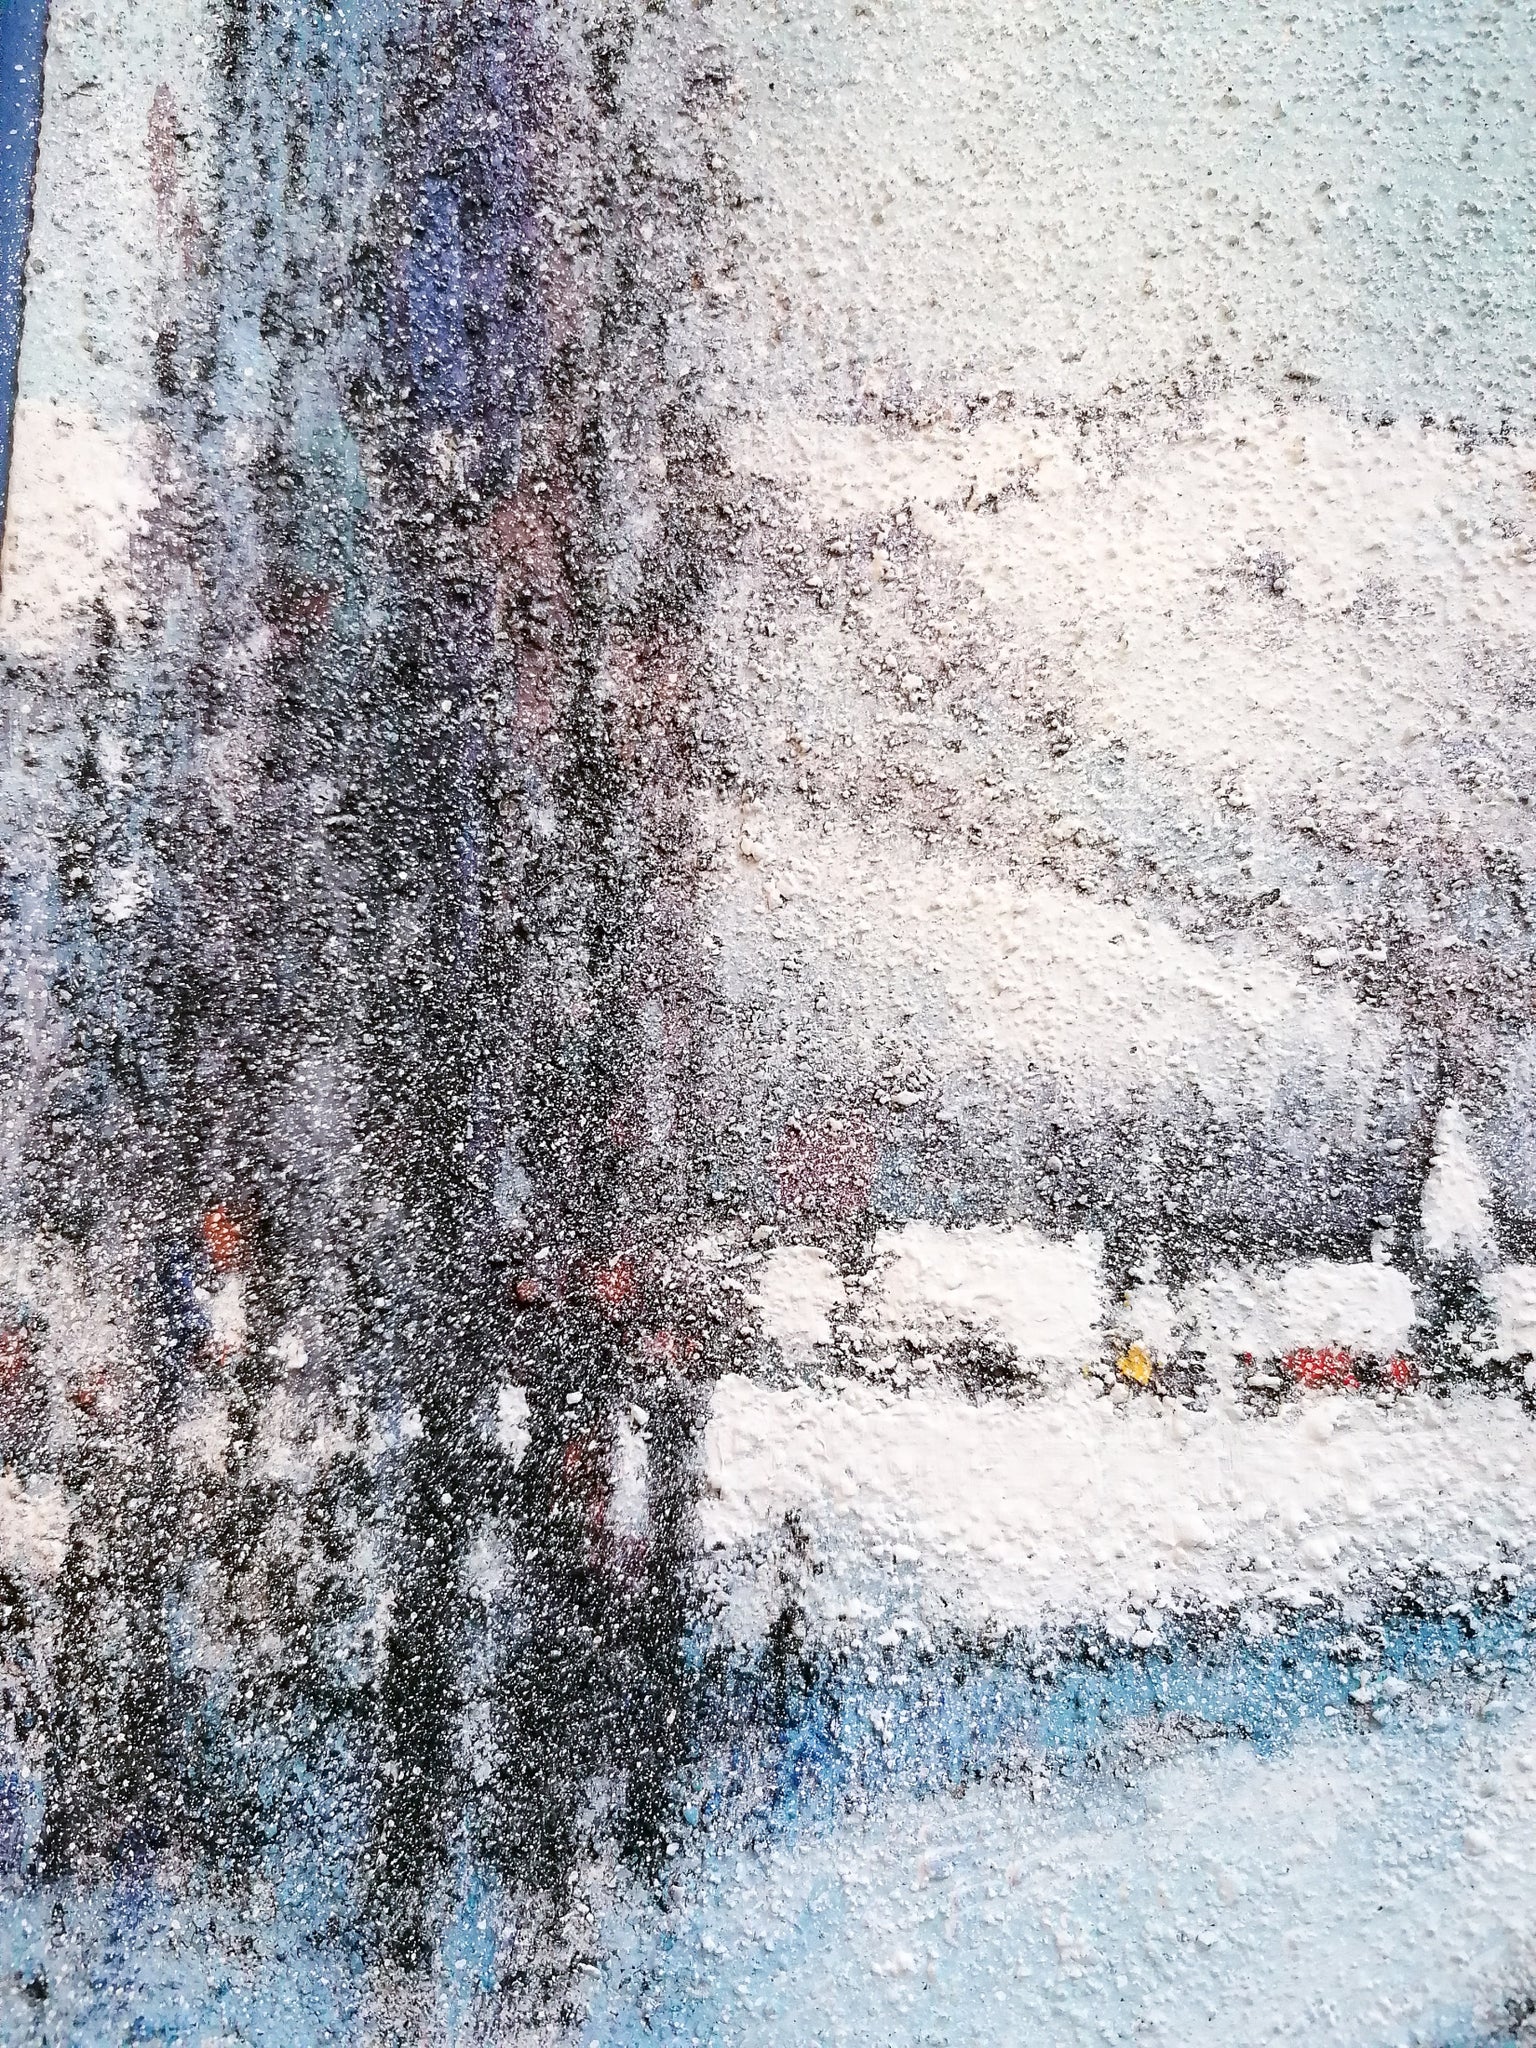 dipinto paesaggio innevato neve montagna epoca 1900 tecnica mista tavola arte